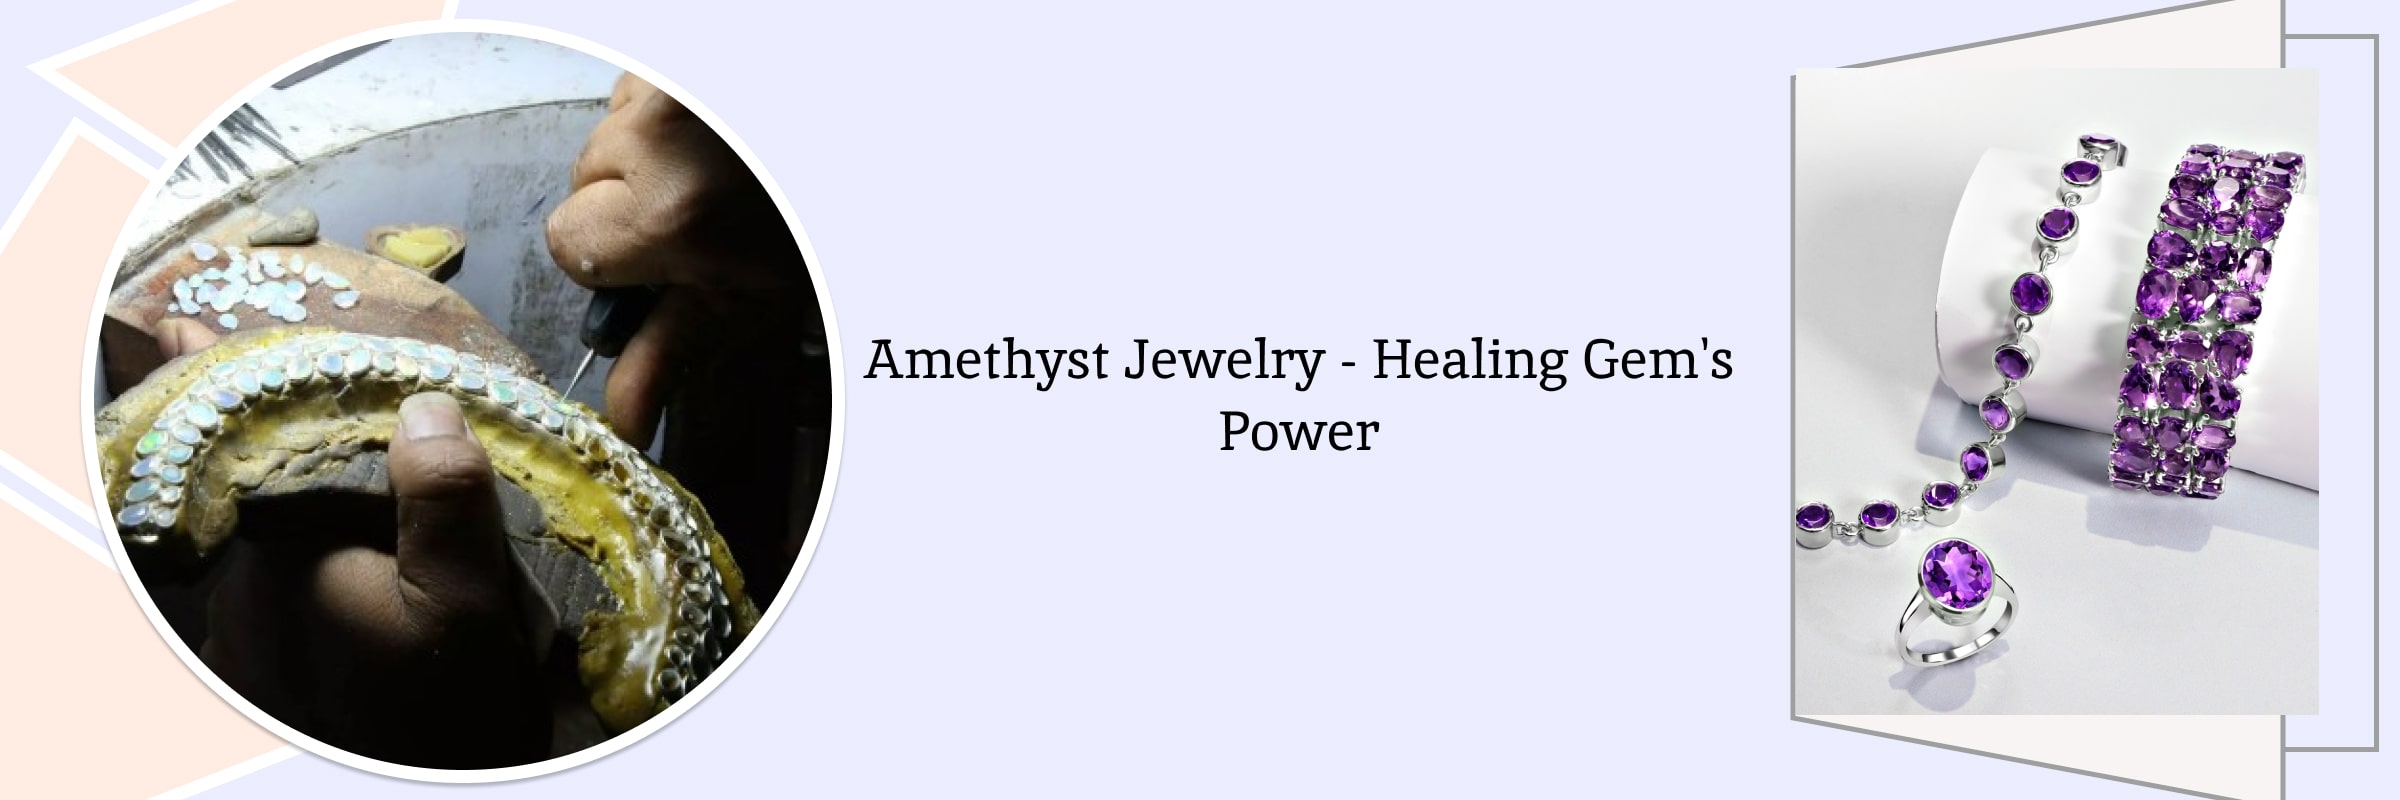 Healing Properties of Amethyst Jewelry